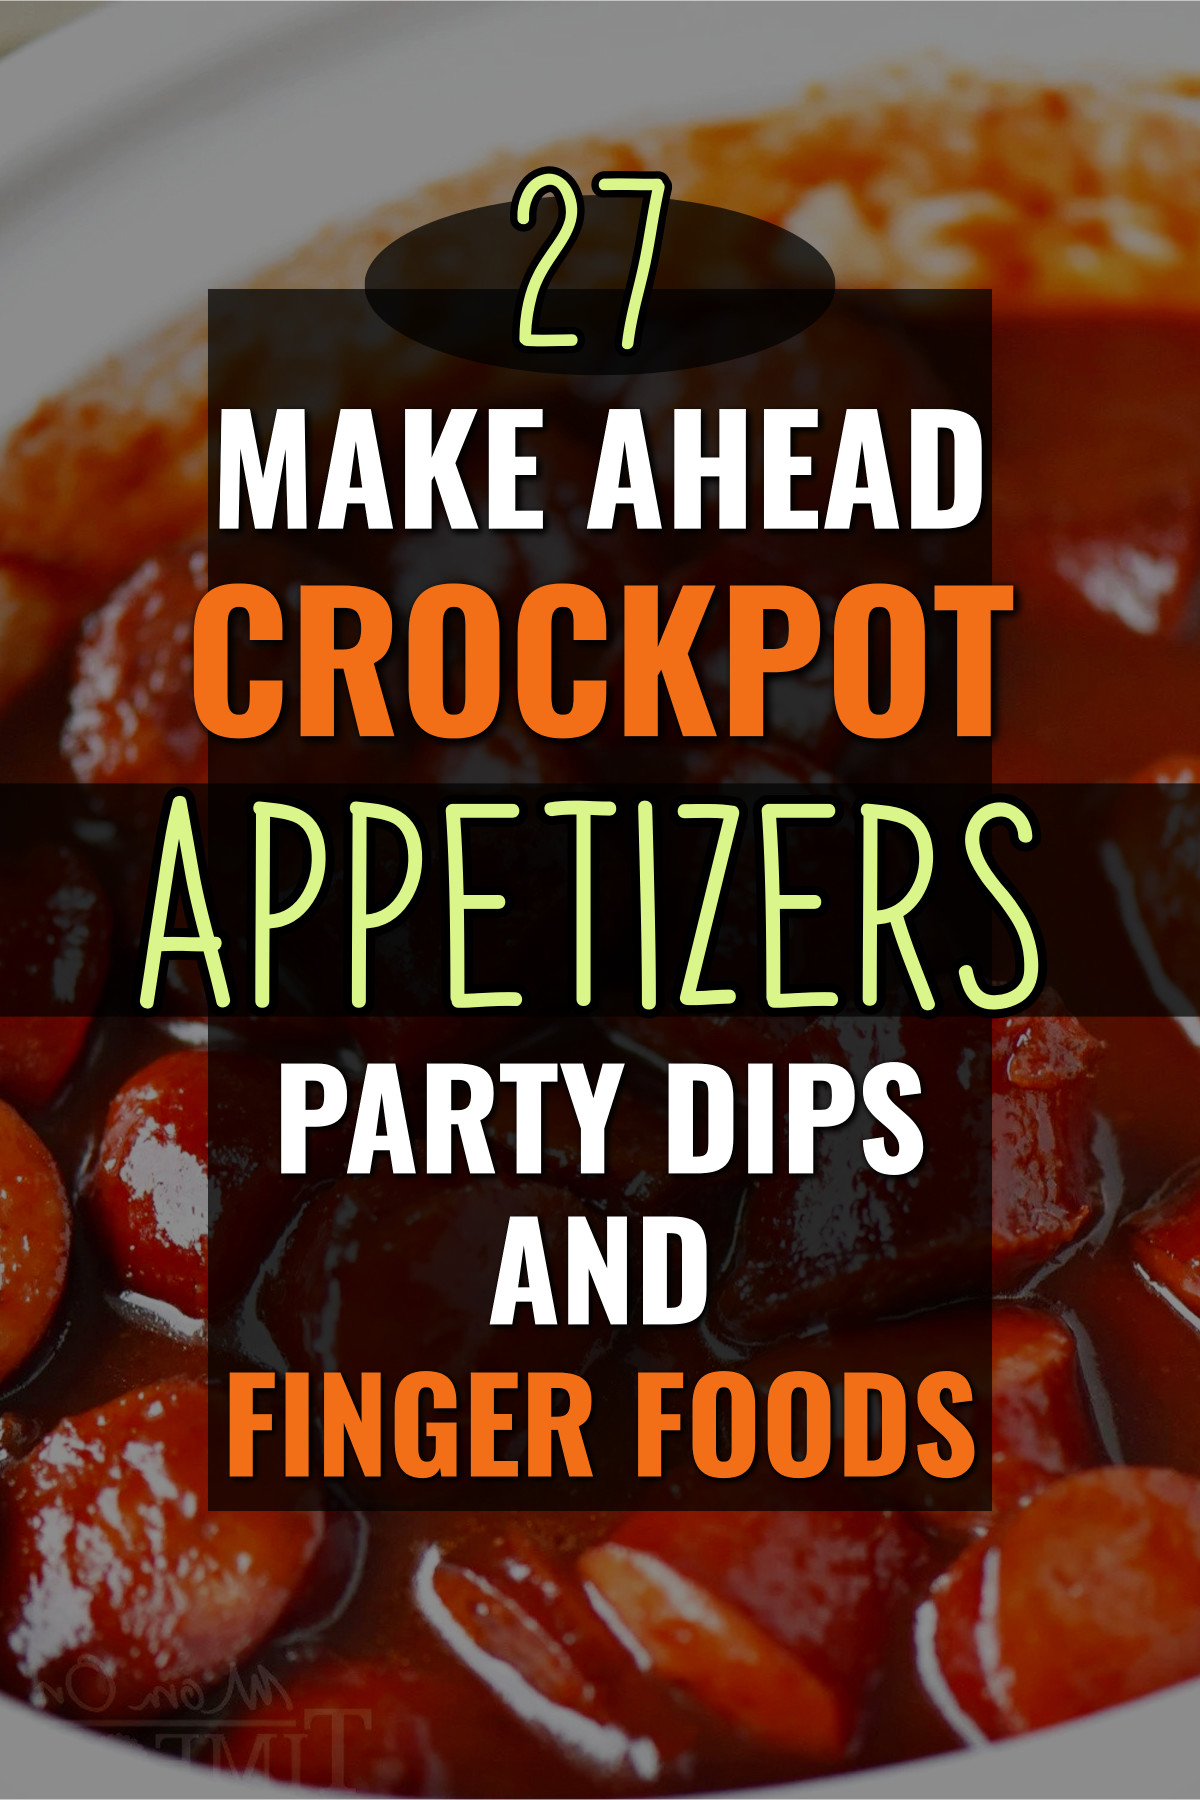 crockpot appetizers